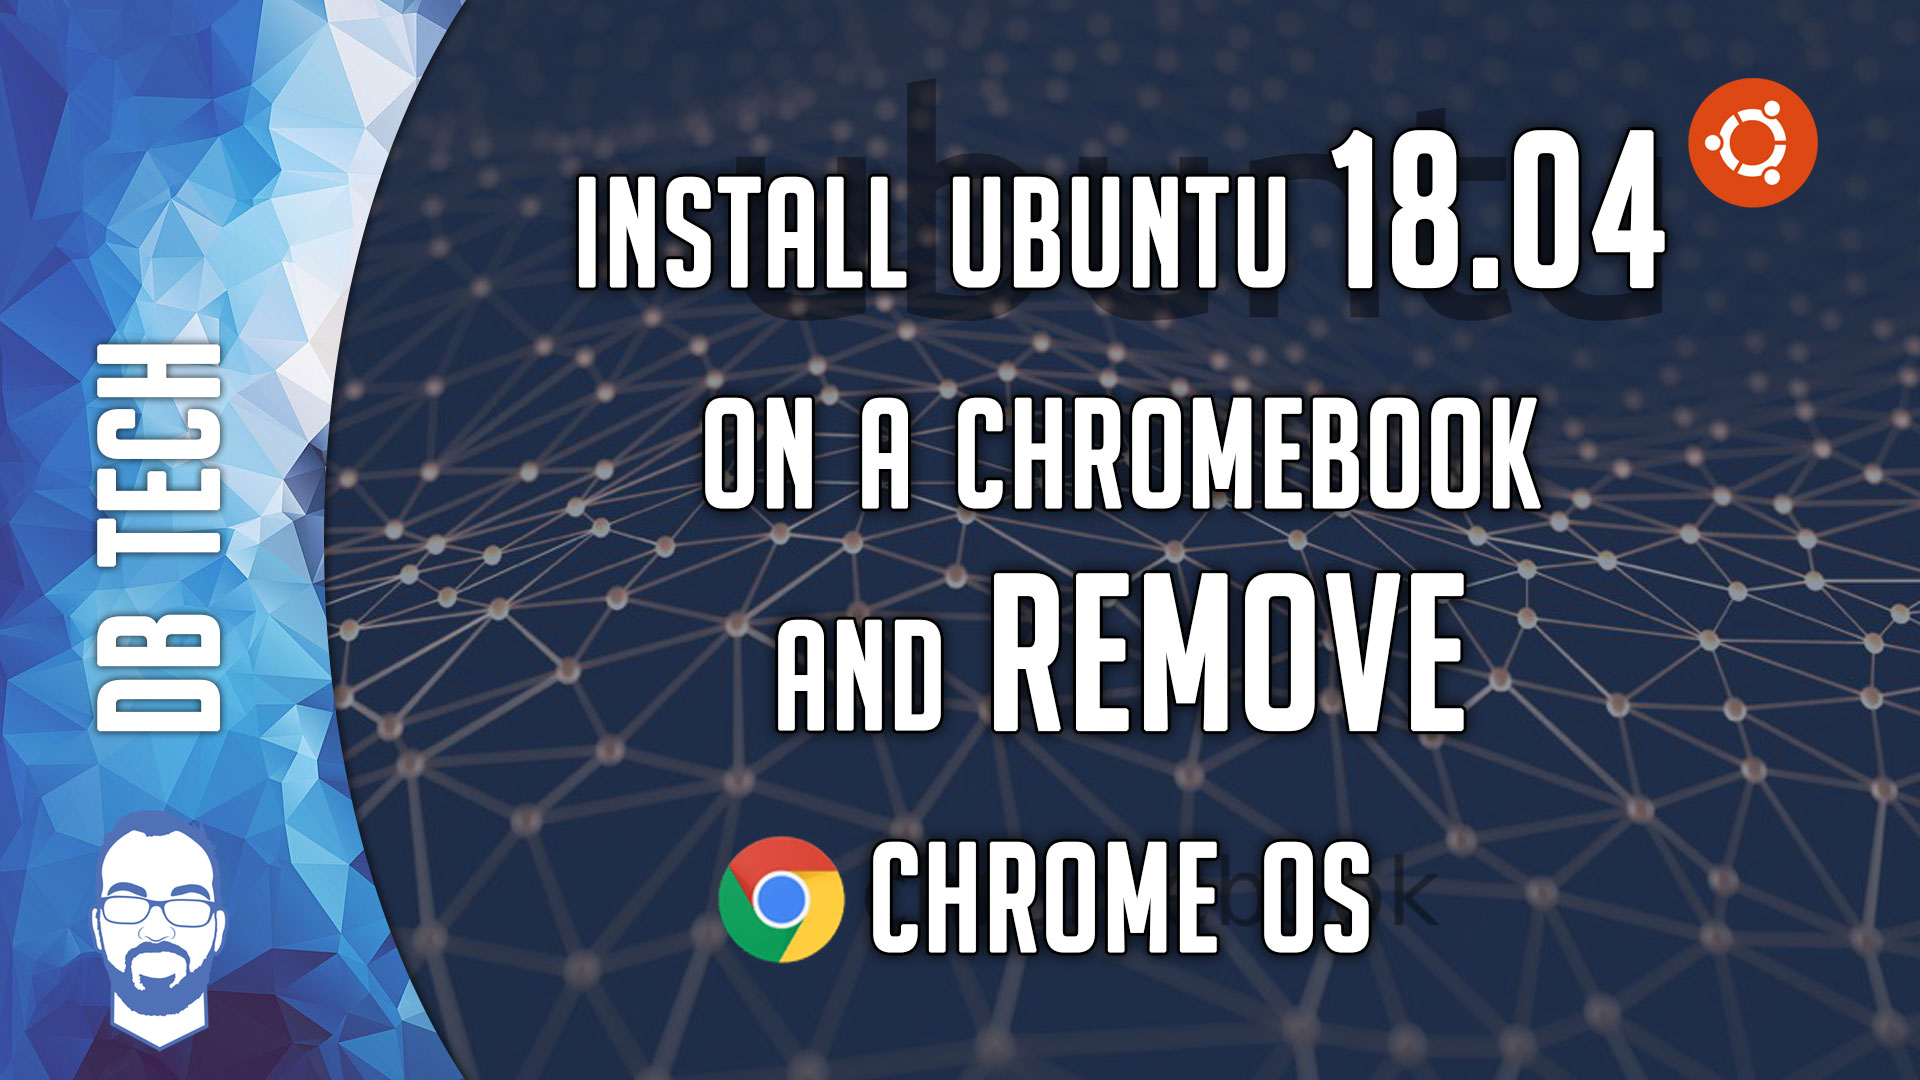 install chrome os linux usb disk image